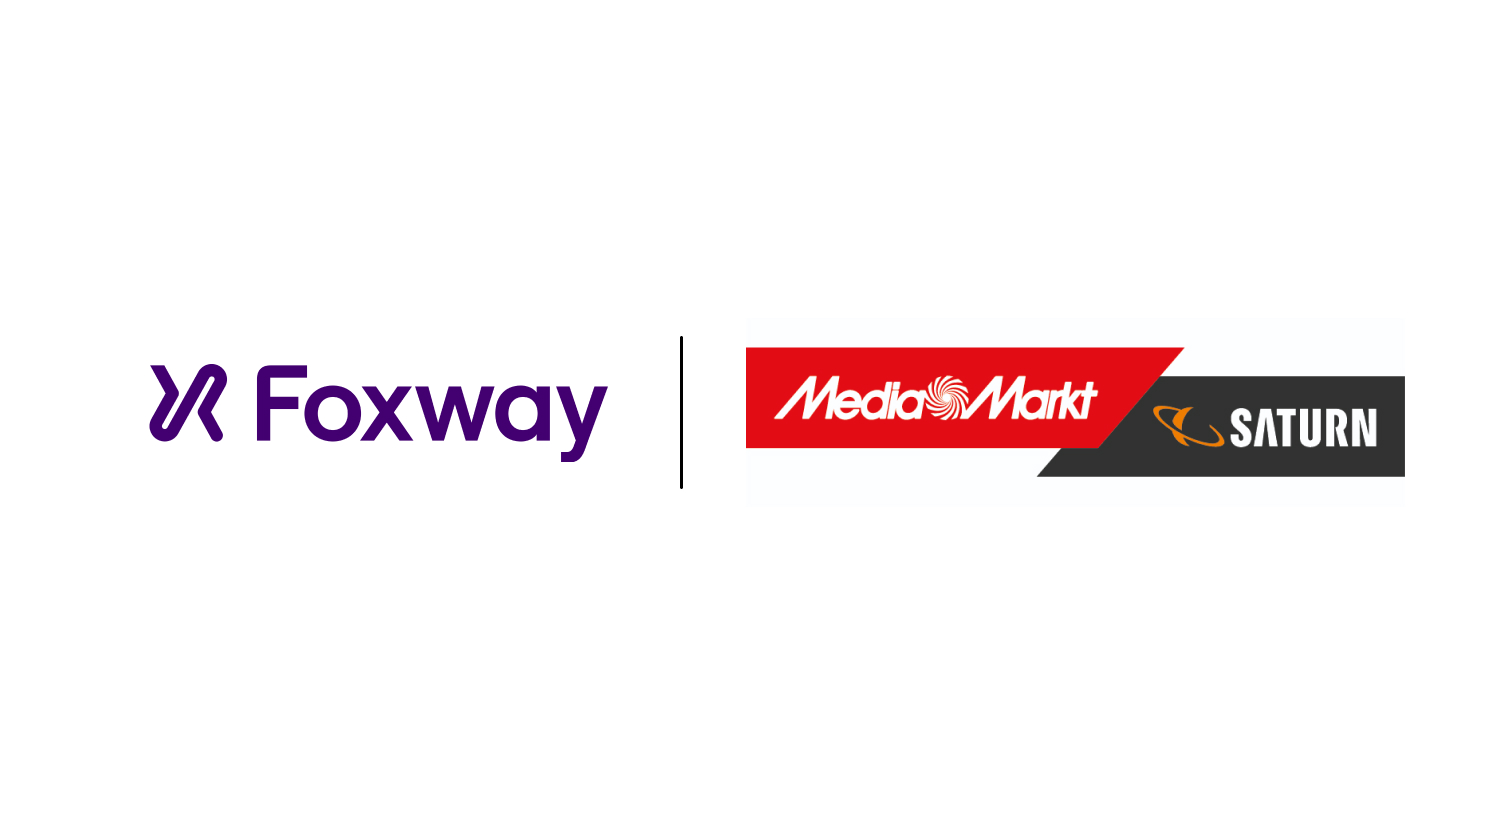 MediaMarktSaturn and Foxway form a comprehensive Re-Commerce partnership -  Foxway